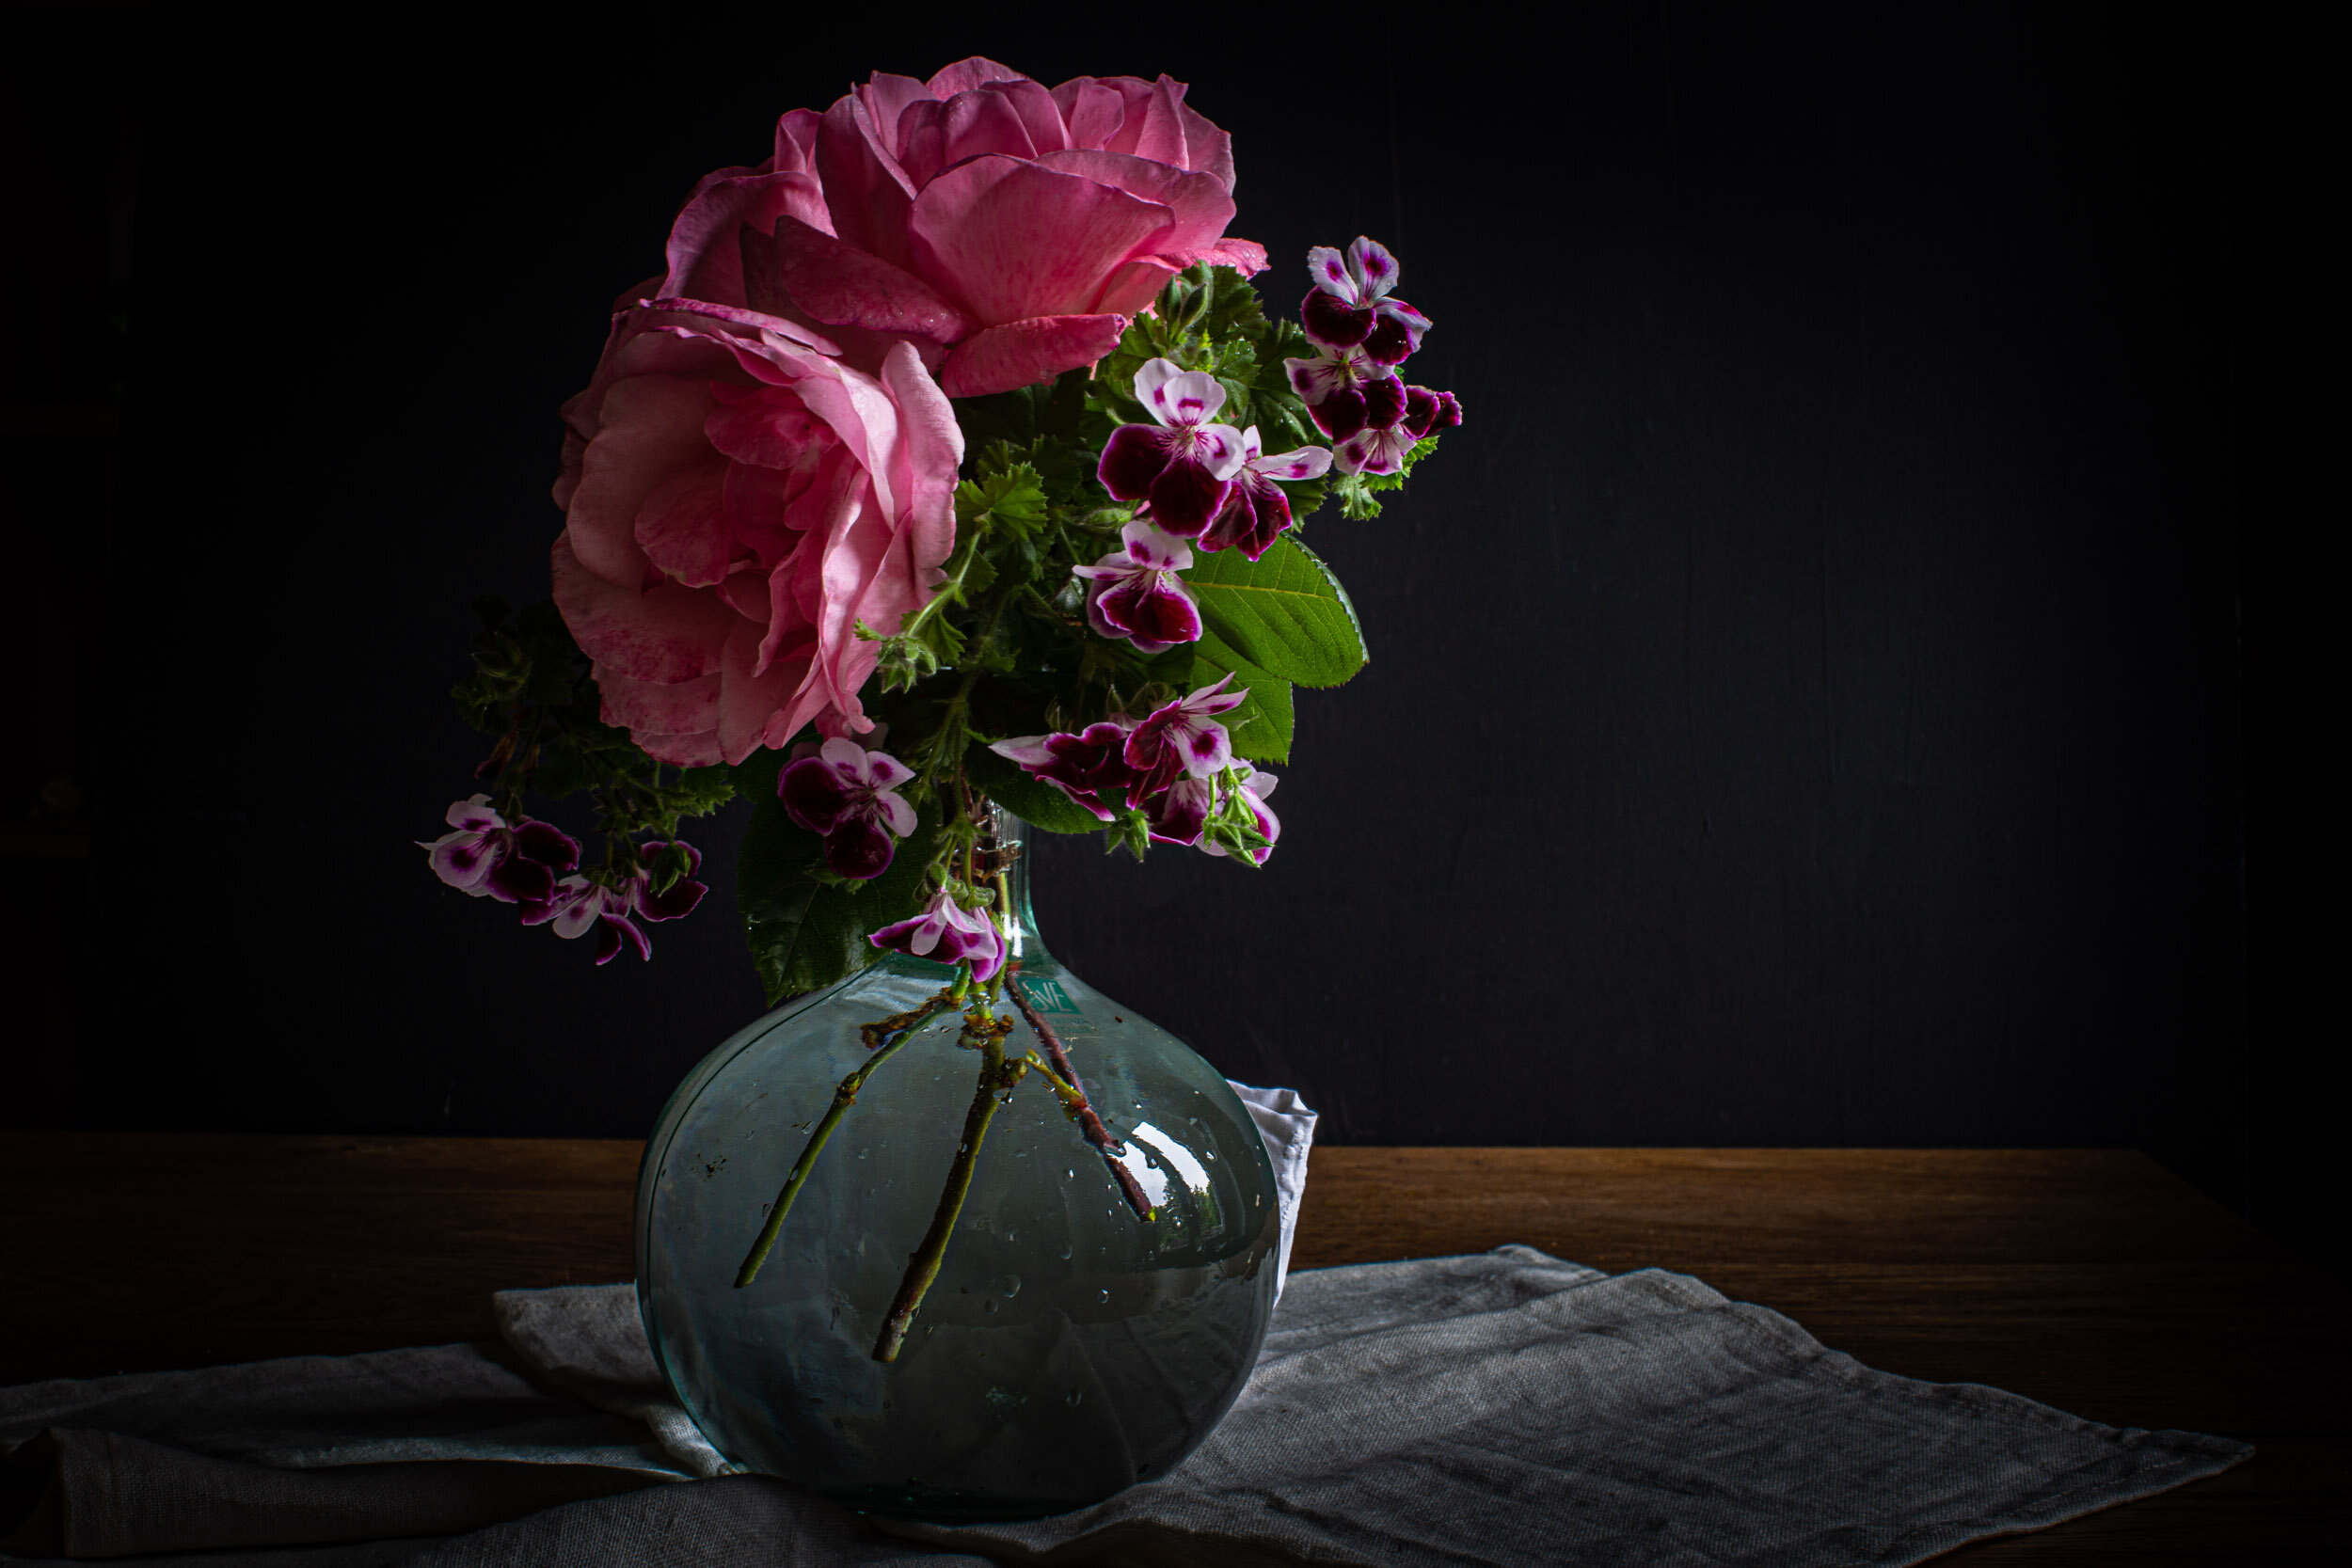 Stefania-Boglioli-Roses-and-Geranium-Vase-Still-Life-Web-Version-0380.jpg